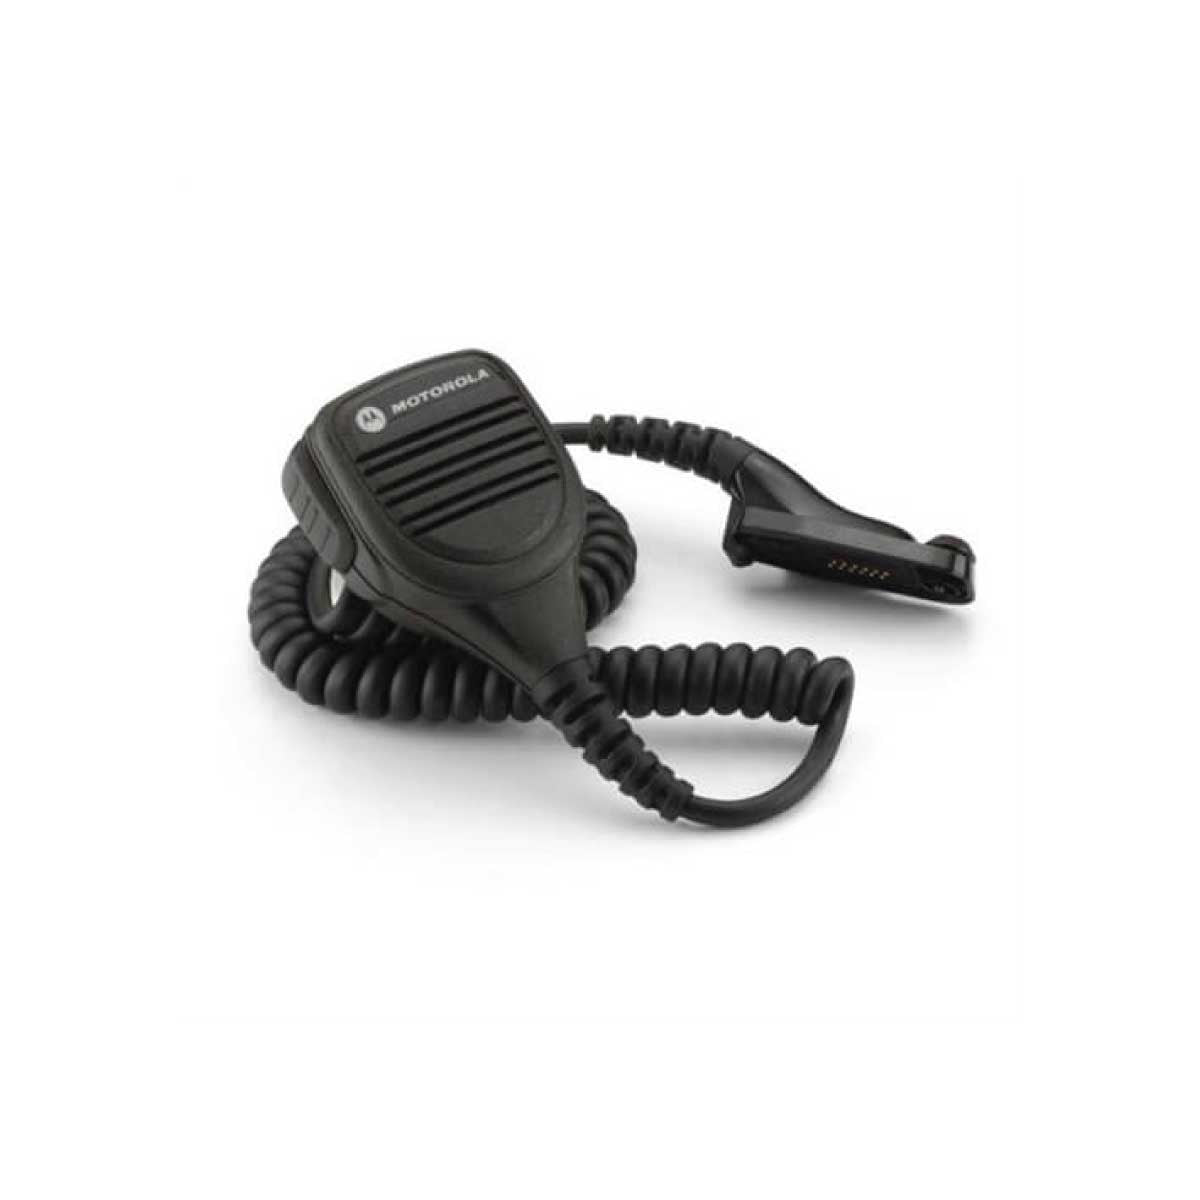 Motorola DP4000 - Small Remote Speaker Mic 3.5mm Jack